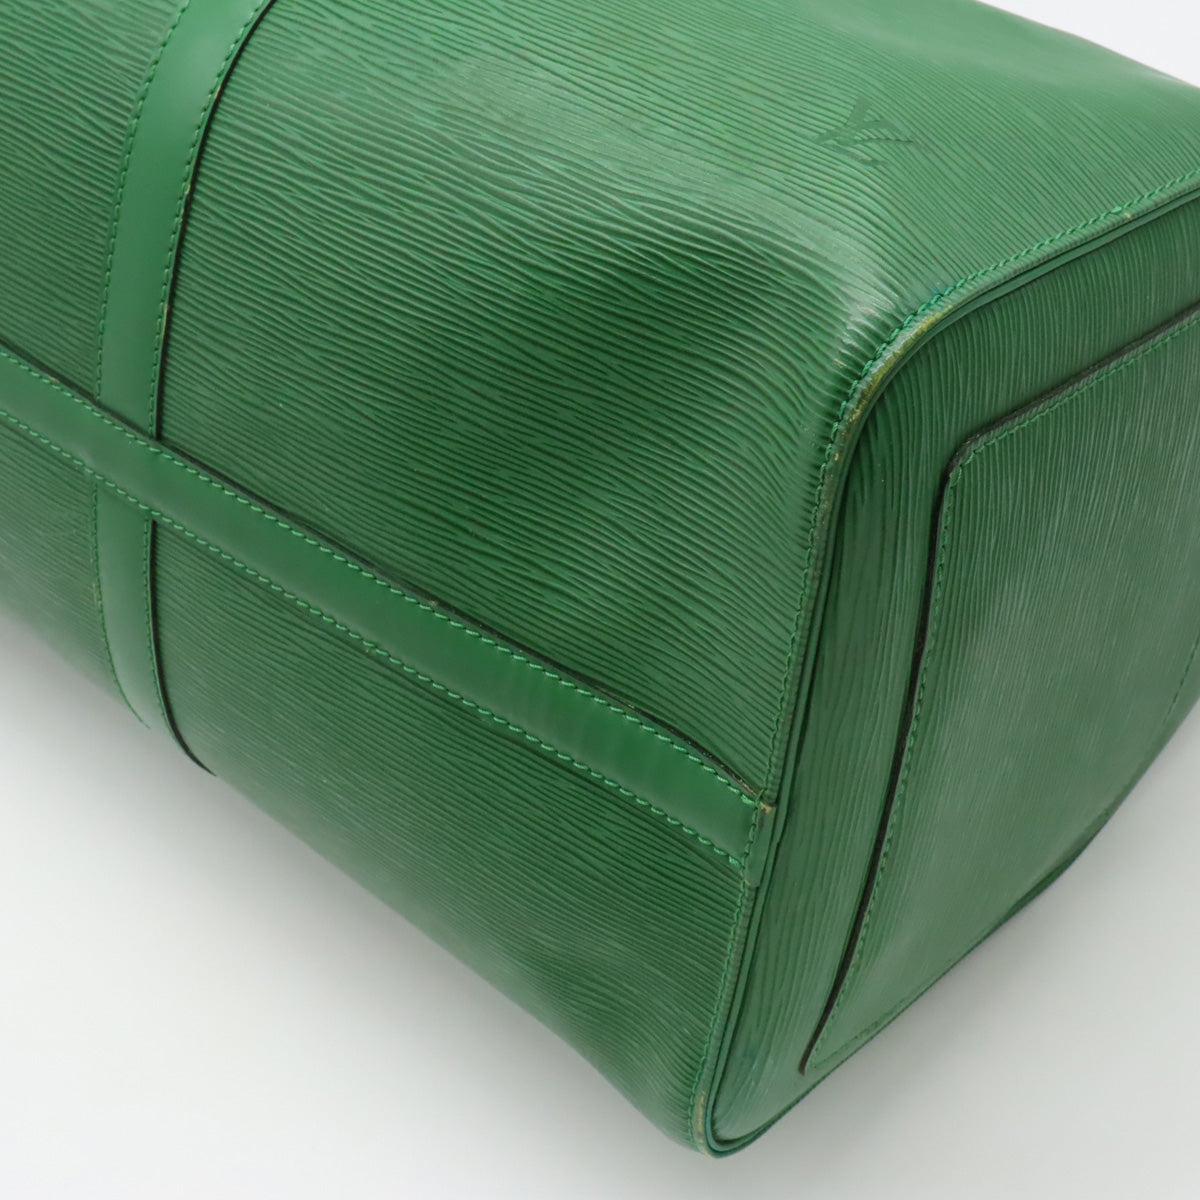 Louis Vuitton Green Epi Leather Borneo Keepall 55 Duffle Bag